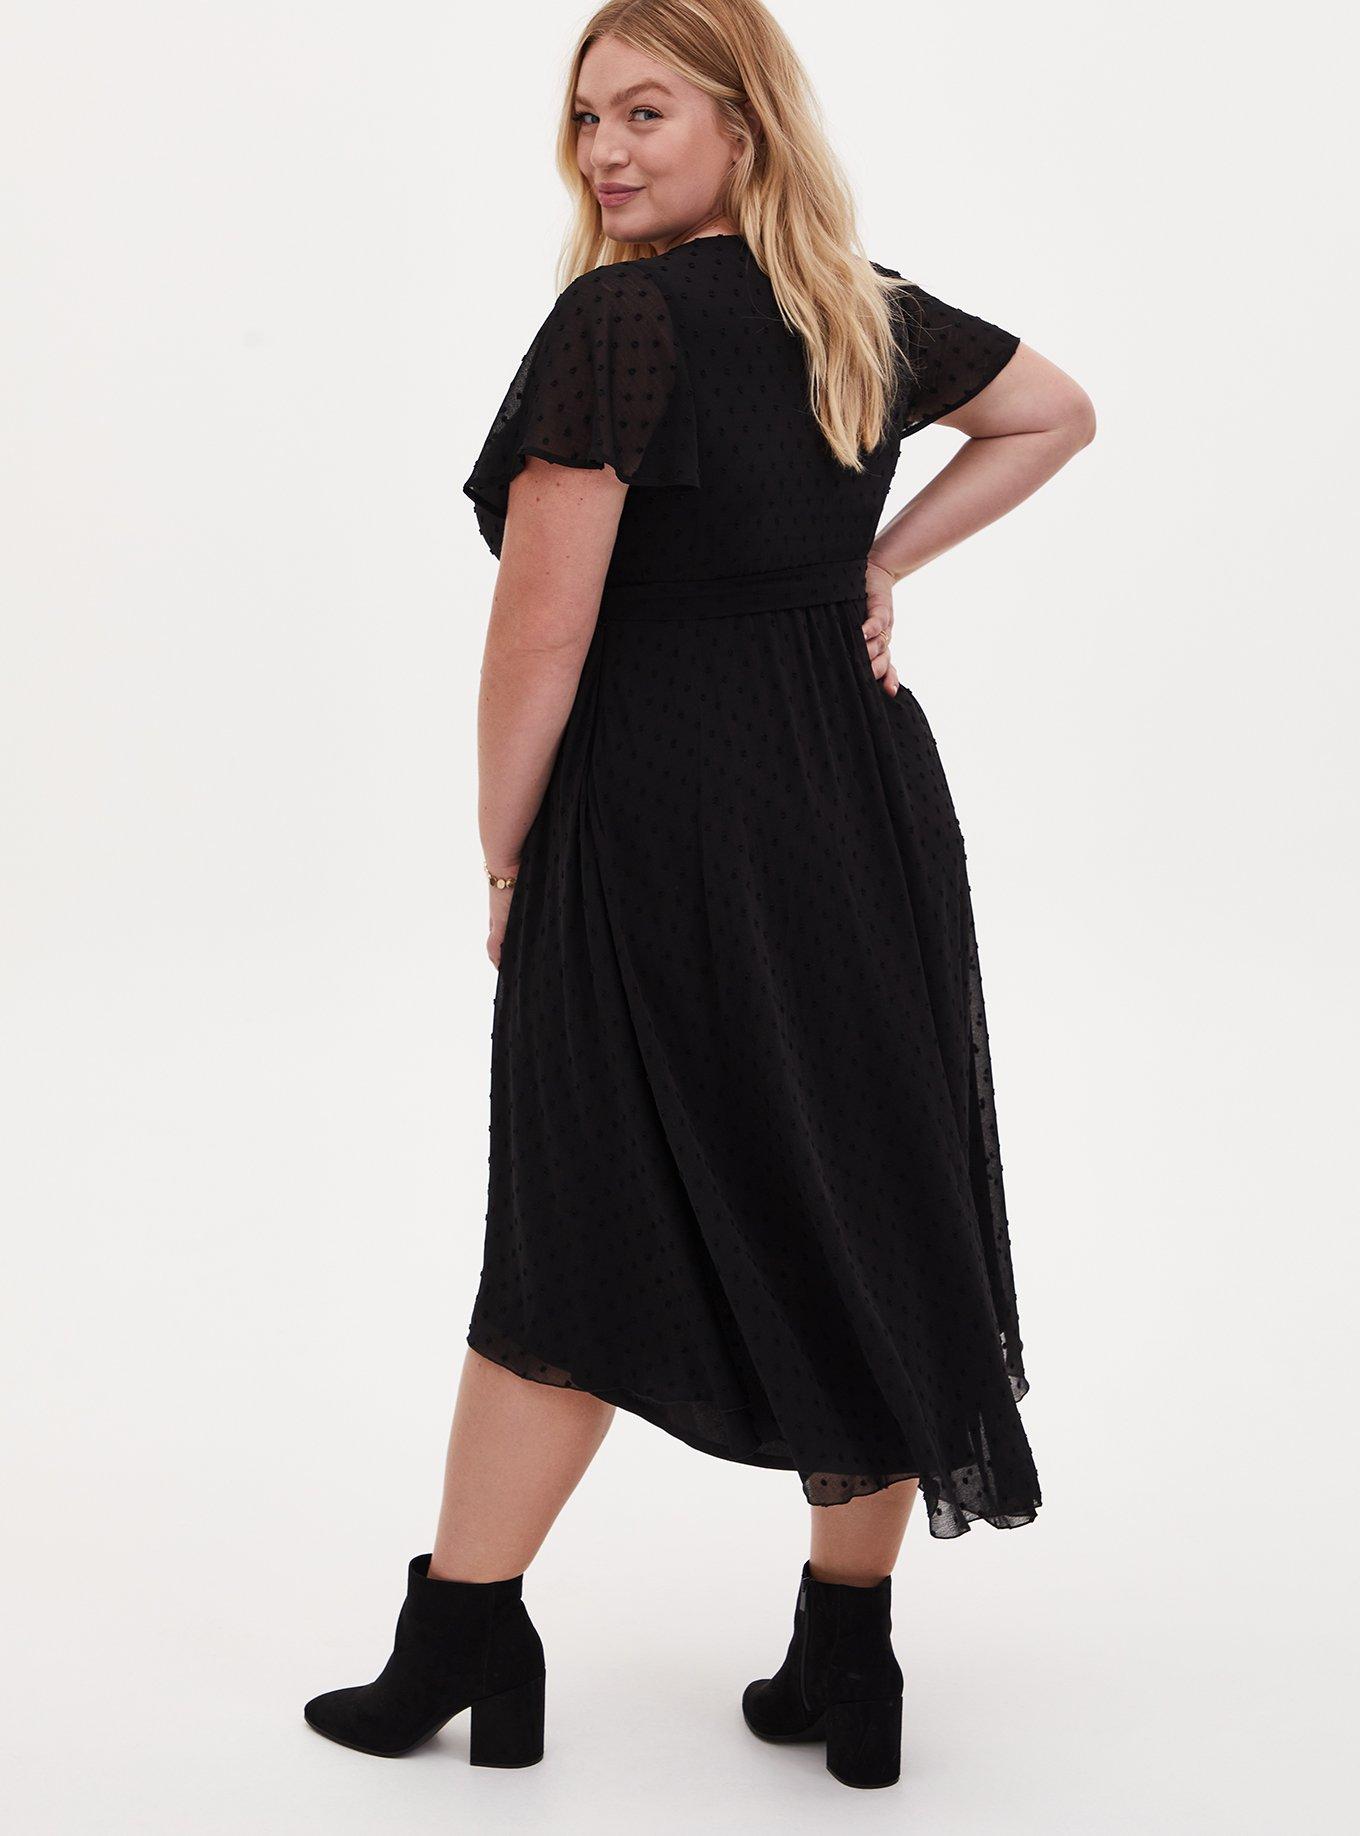 Plus Size - Black Swiss Dot Wrap Dress - Torrid